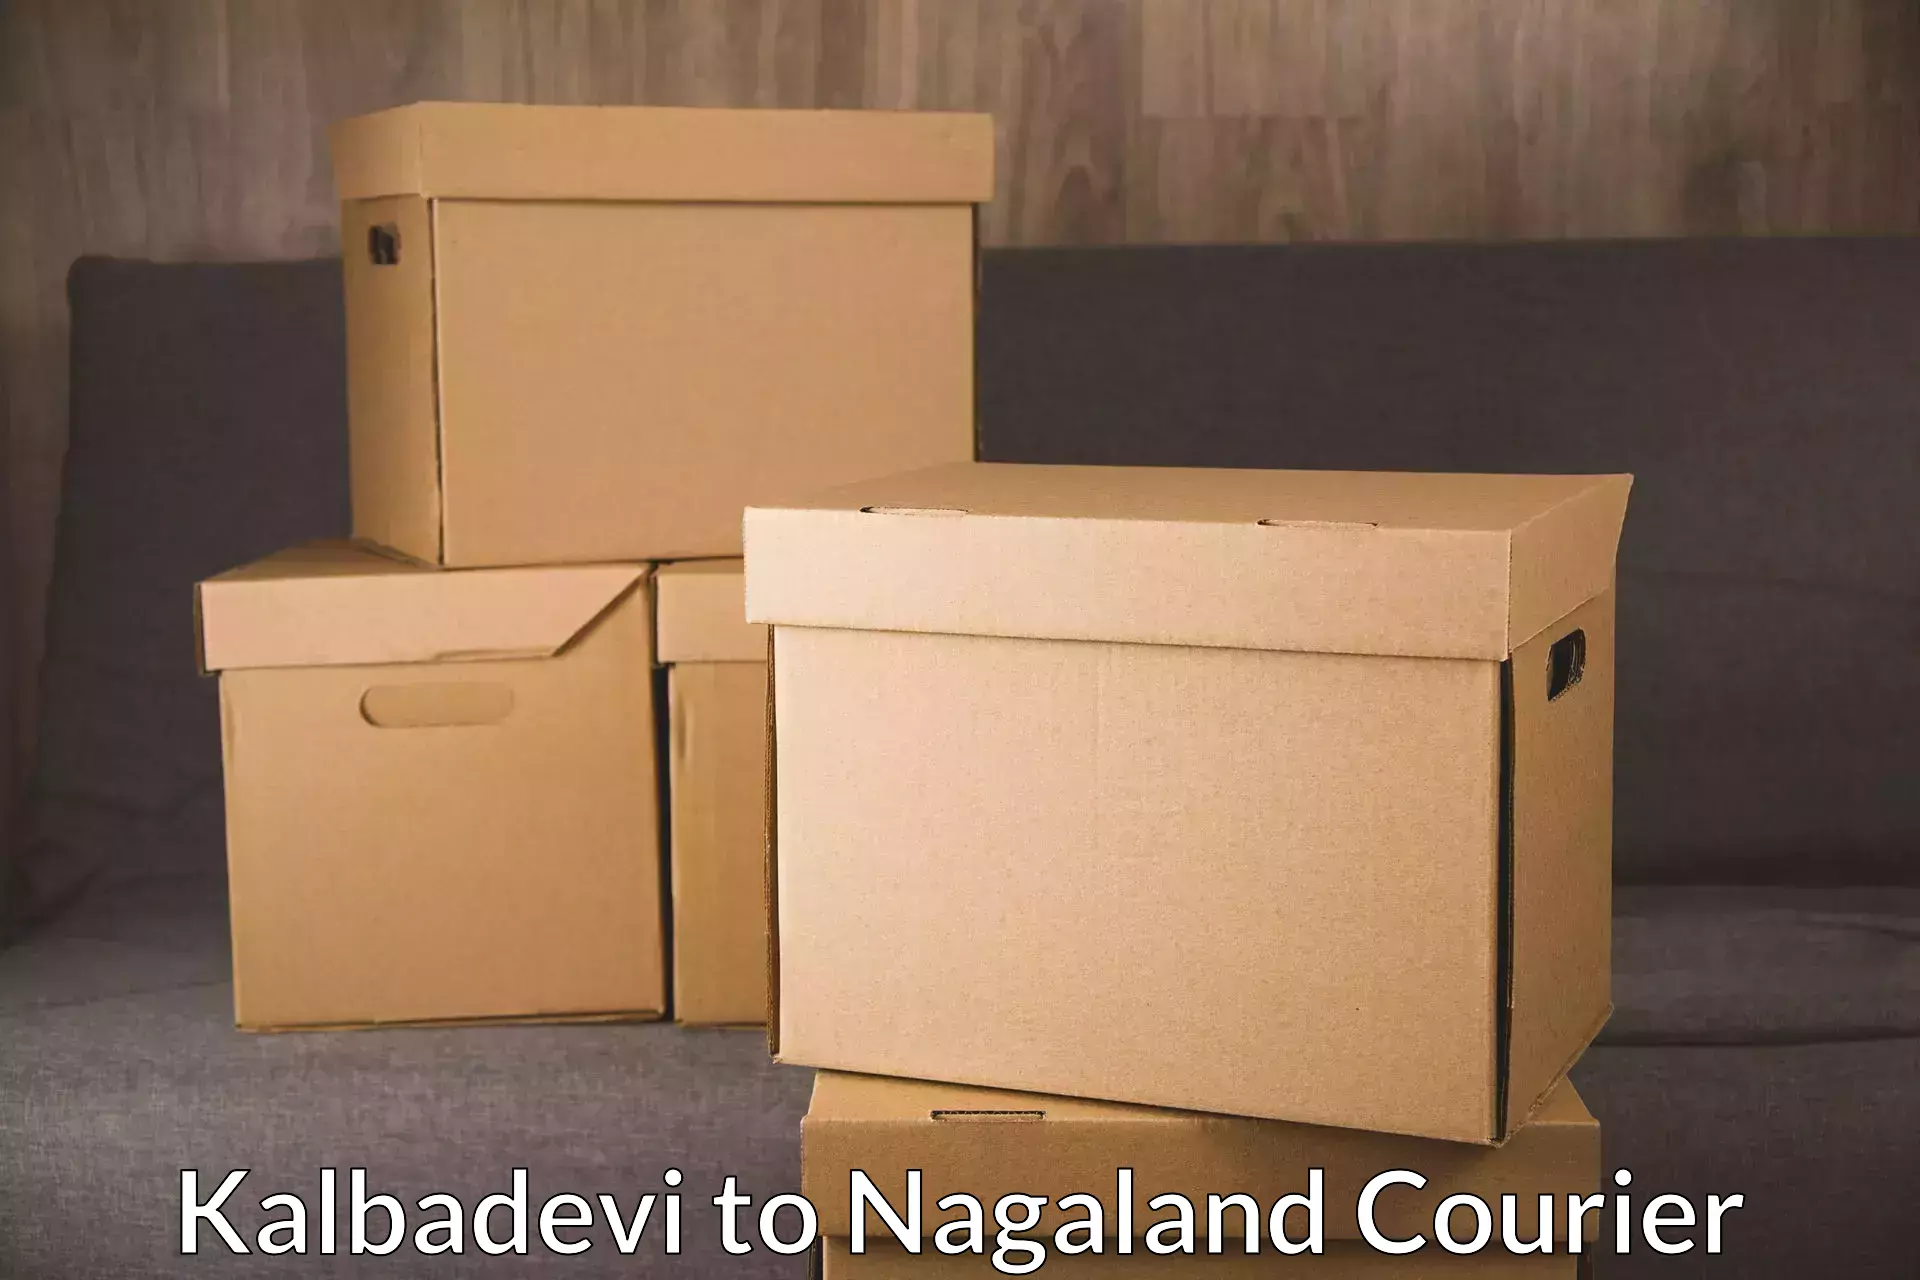 International courier networks Kalbadevi to Nagaland